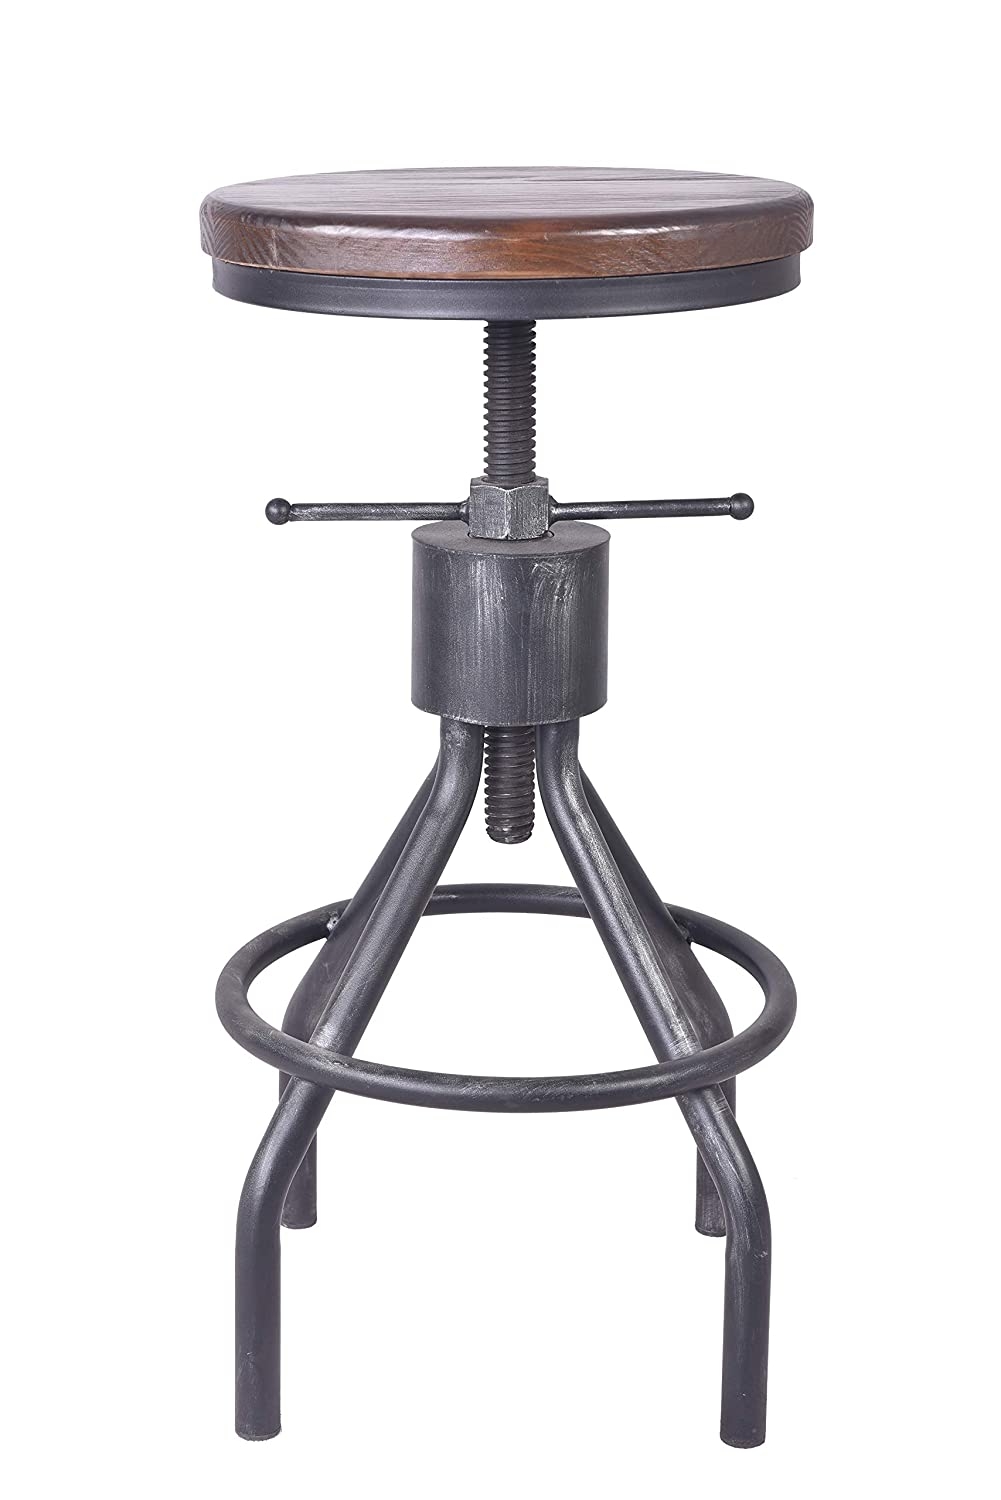 Vintage Bar Stool Industrial Metal Design Wood Top Adjustable Height Swivel M9I3 